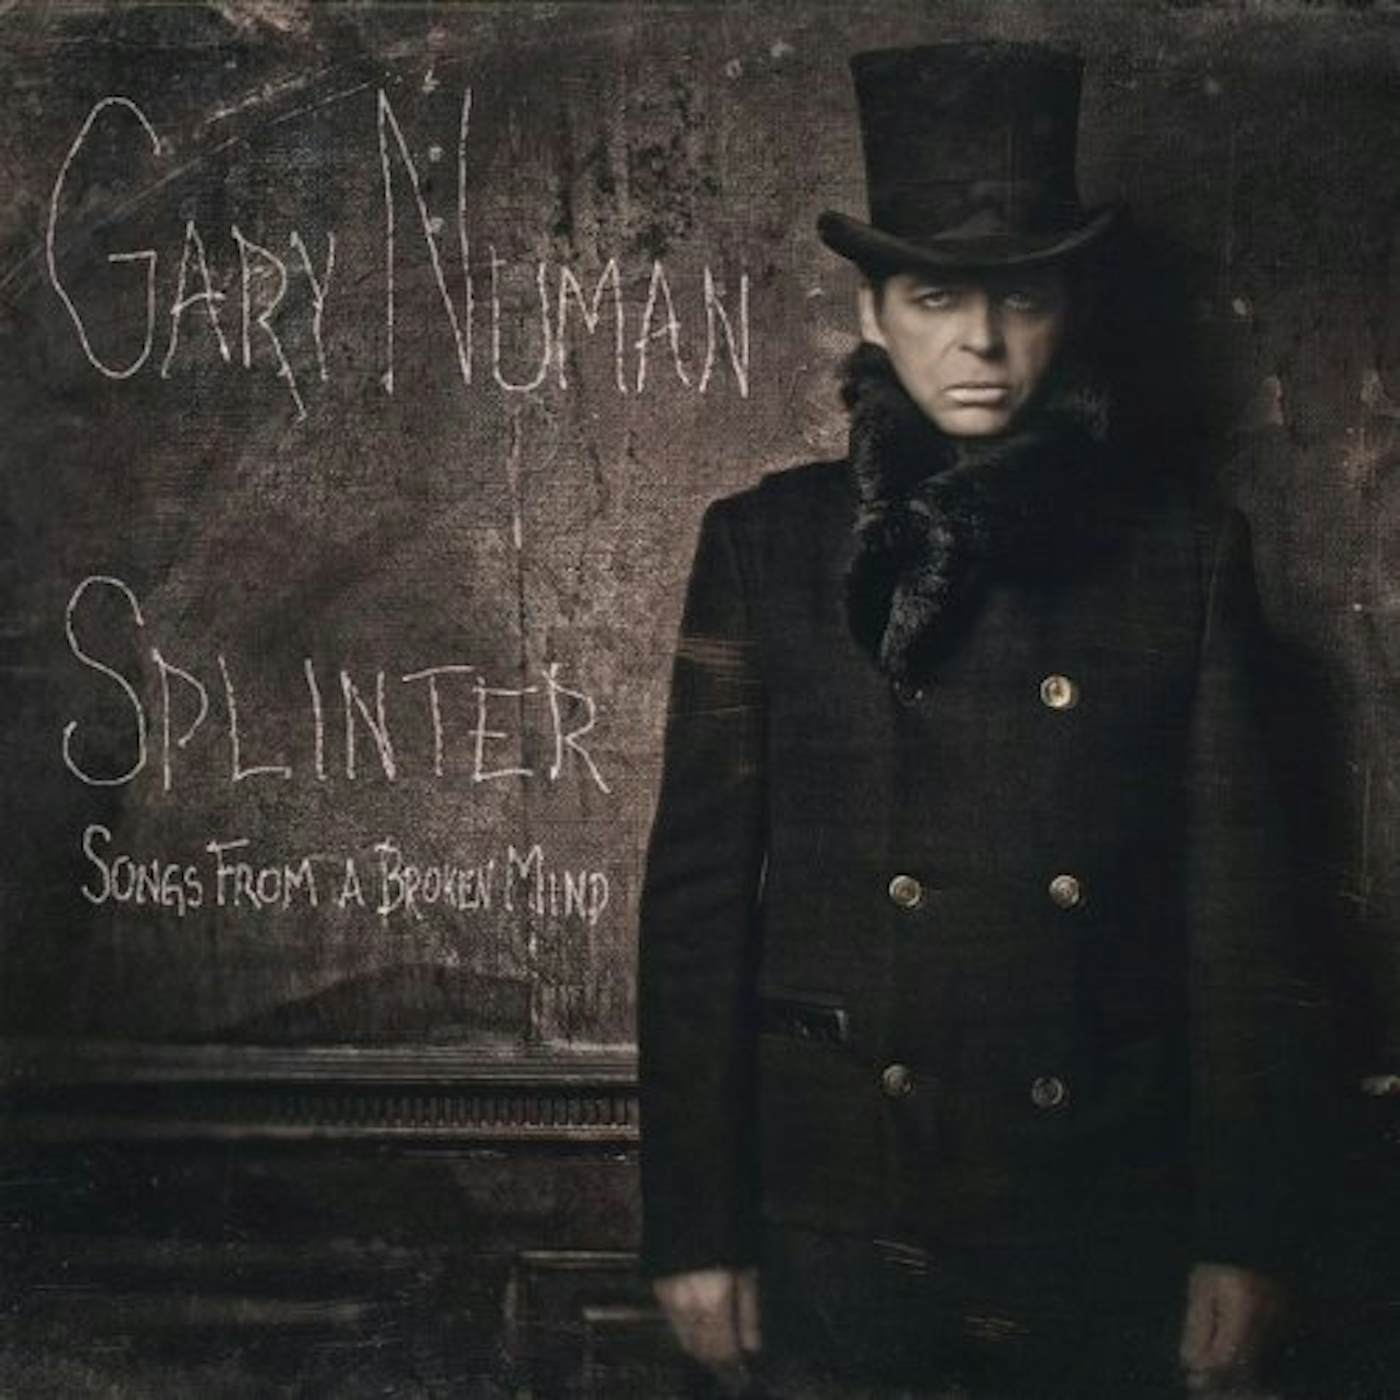 Gary Numan Splinter (Songs from a Broken Mind) Vinyl Record